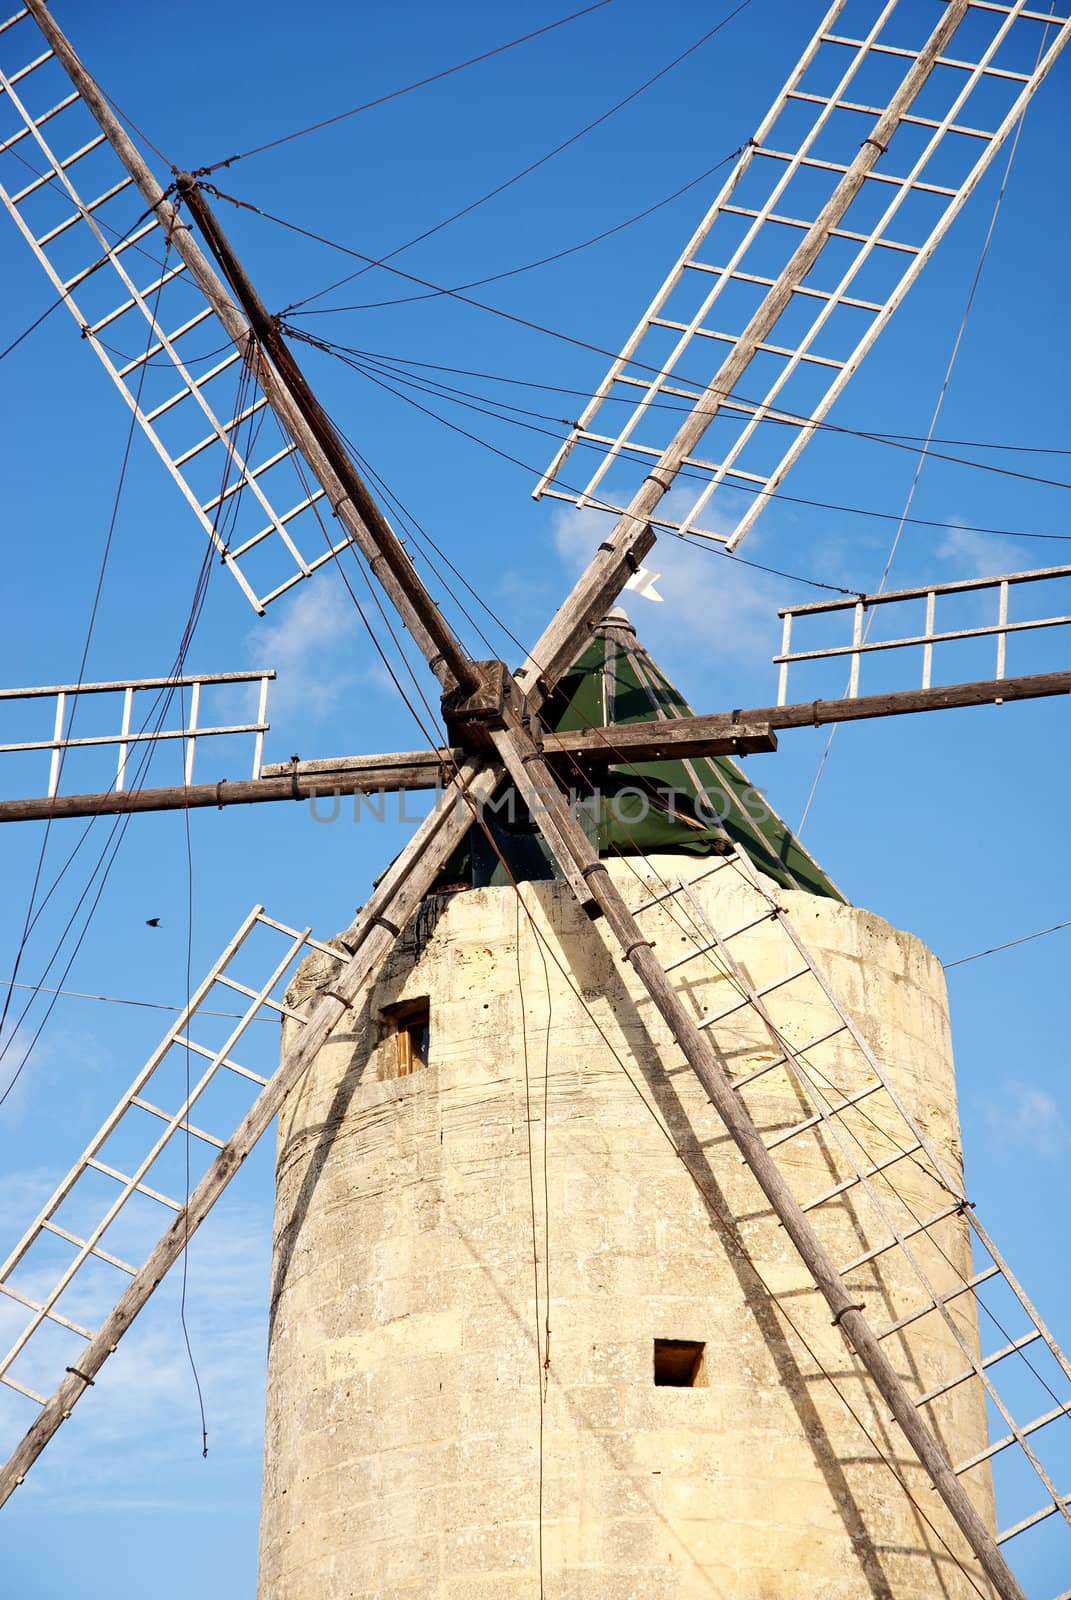 stone windmill on gozo island in malta by jackmalipan